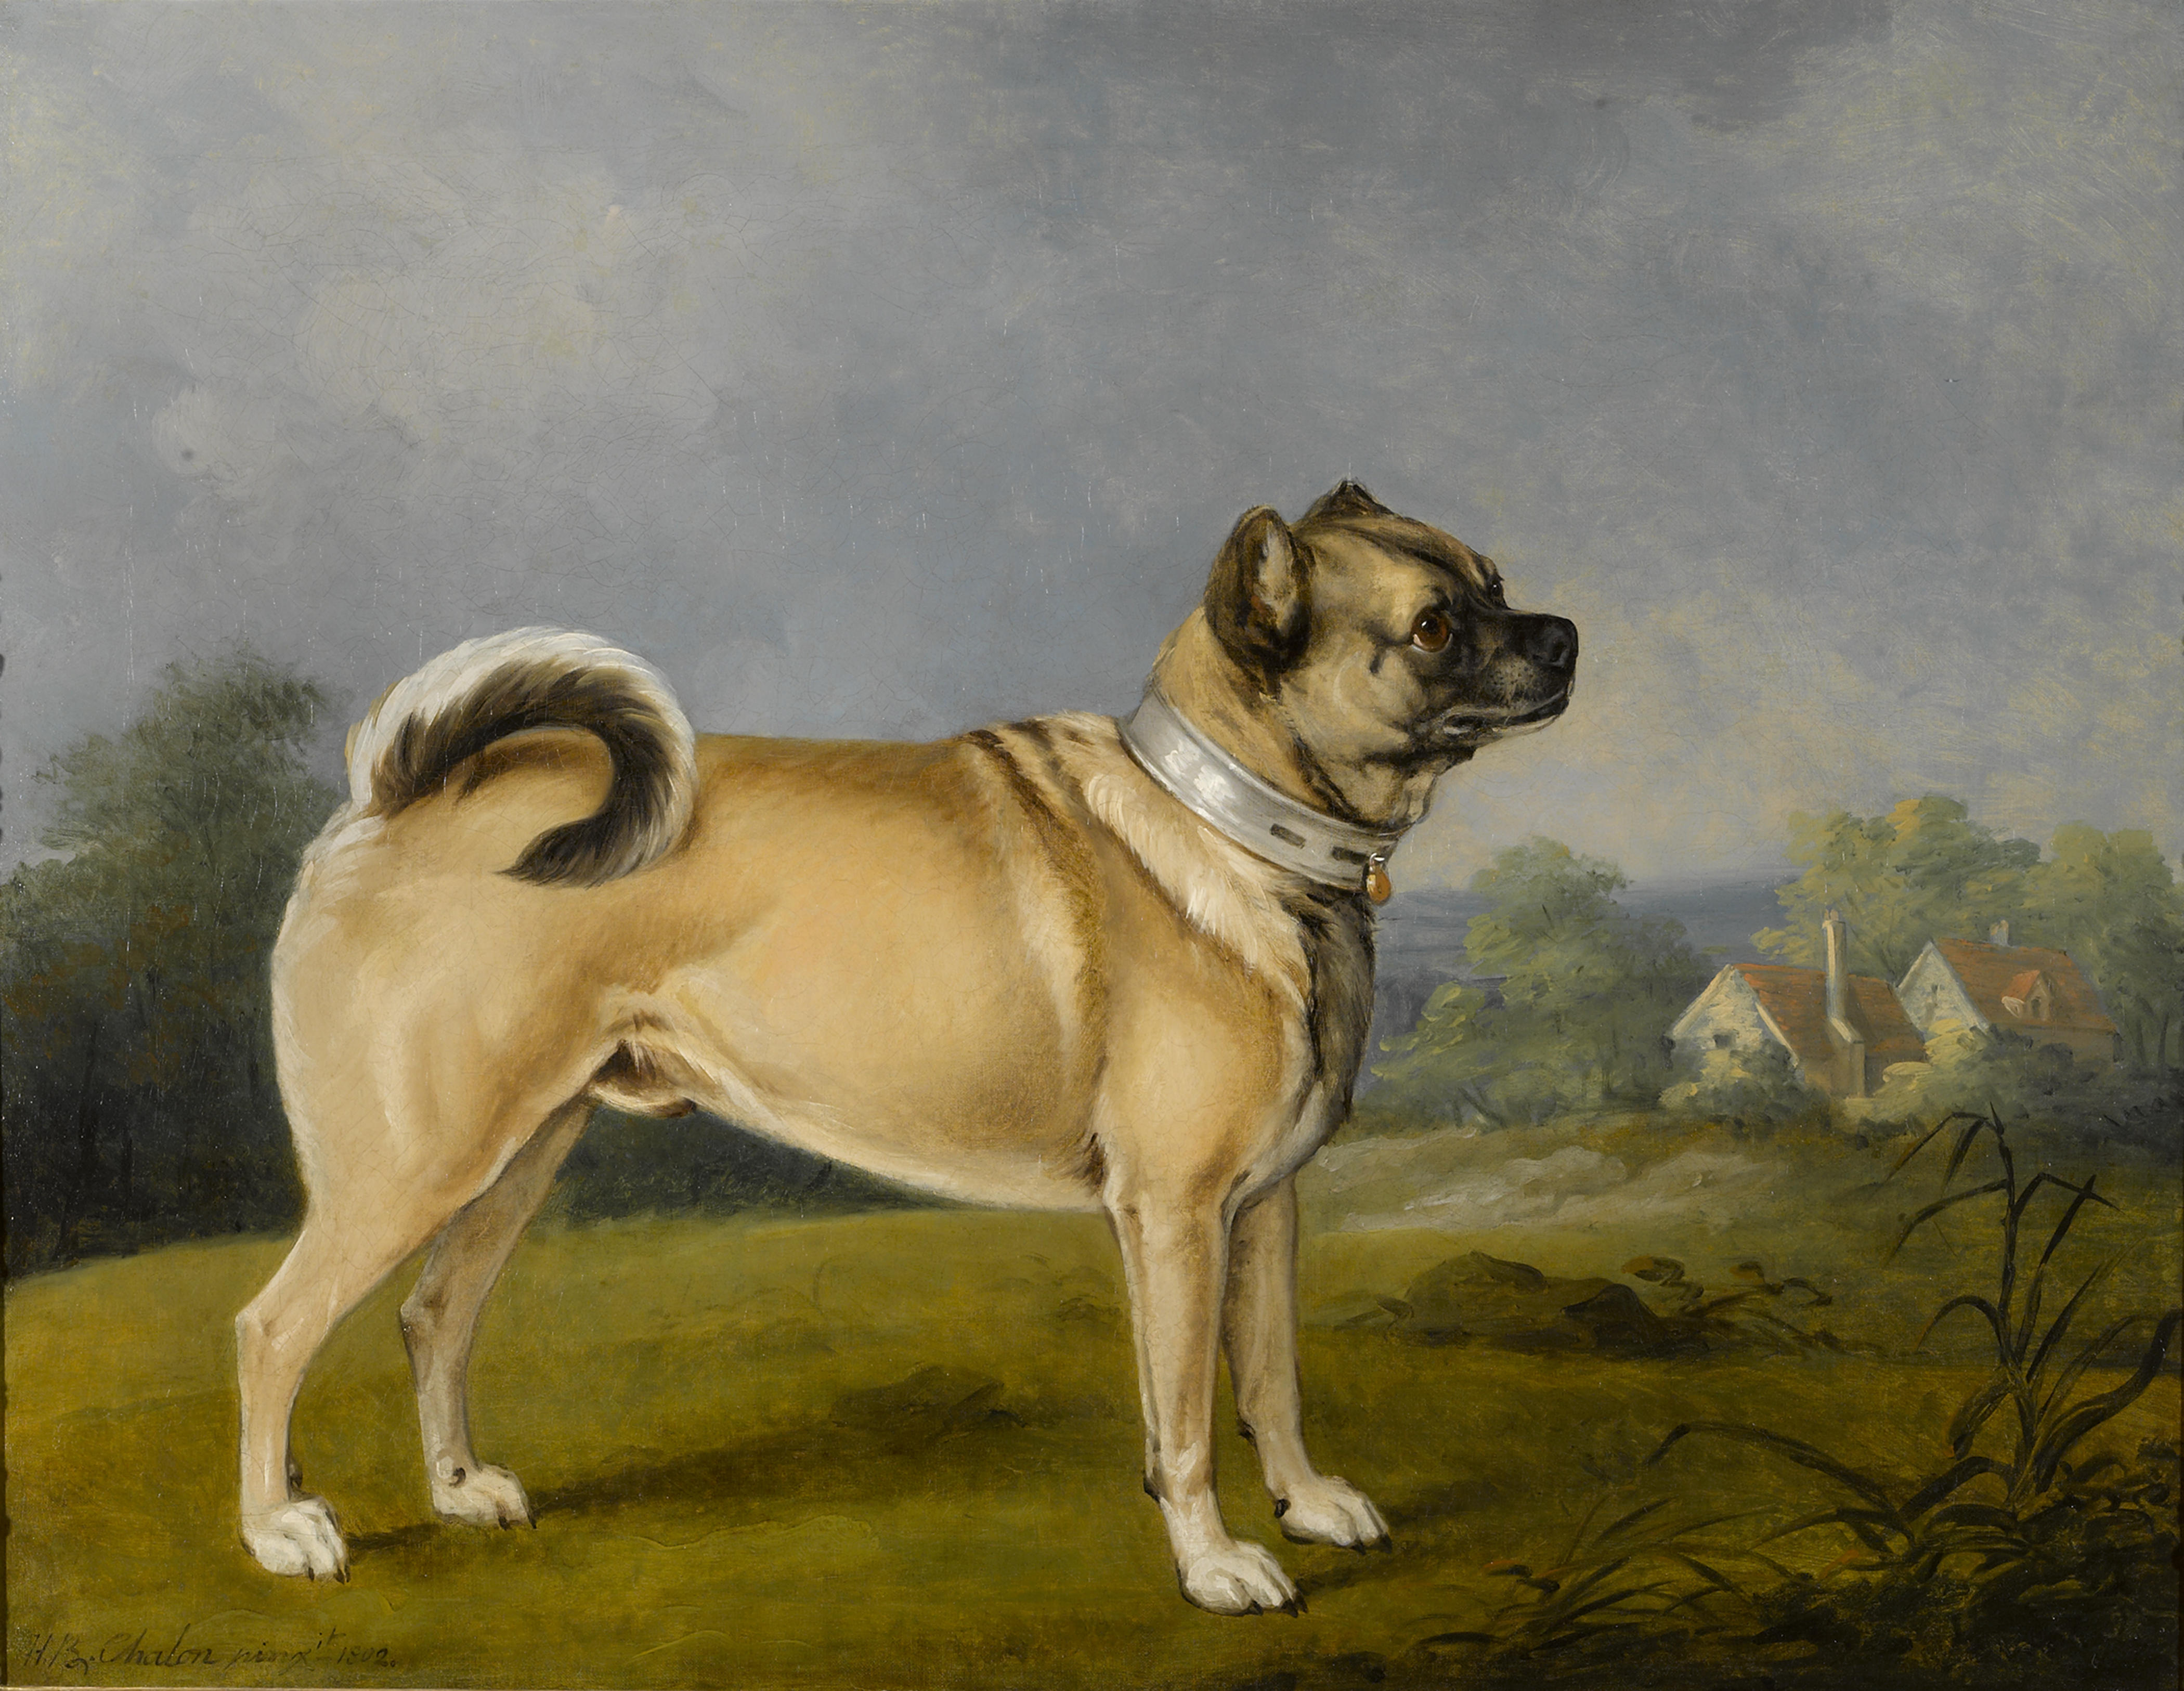 Pugs were believed to have healing abilities. A Favorite Pug by Henry Bernard Chalon, 1802. https://commons.wikimedia.org/wiki/File:Henry_Bernard_Chalon_-_A_favorite_pug_(1802).jpg